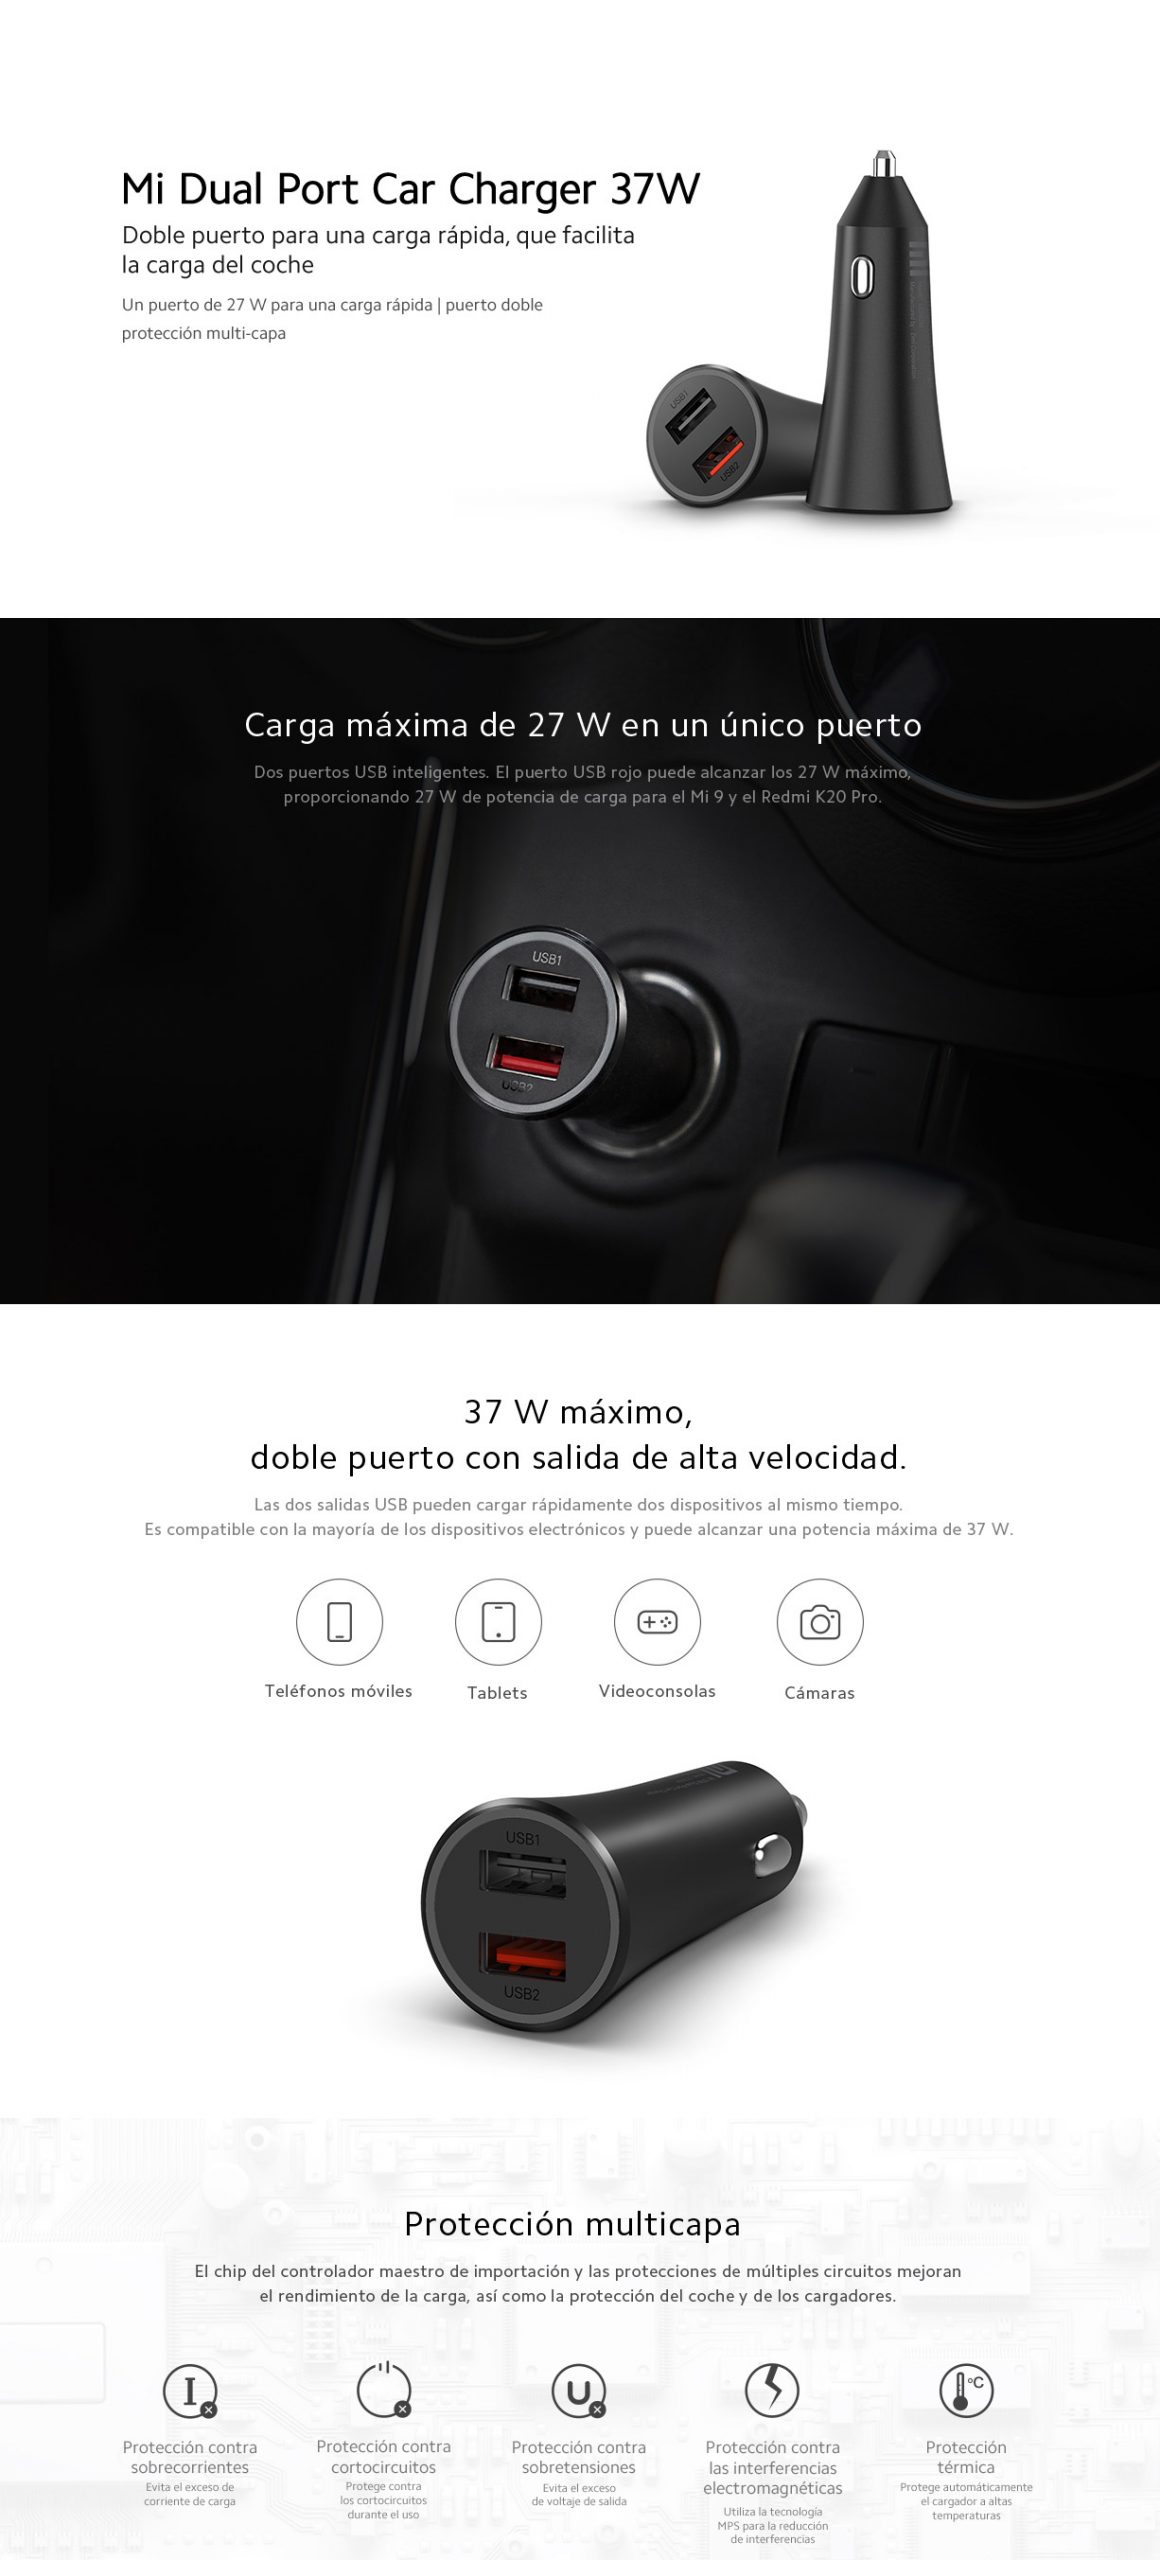 Official Xiaomi Black 37W USB-A Dual Port Car Charger